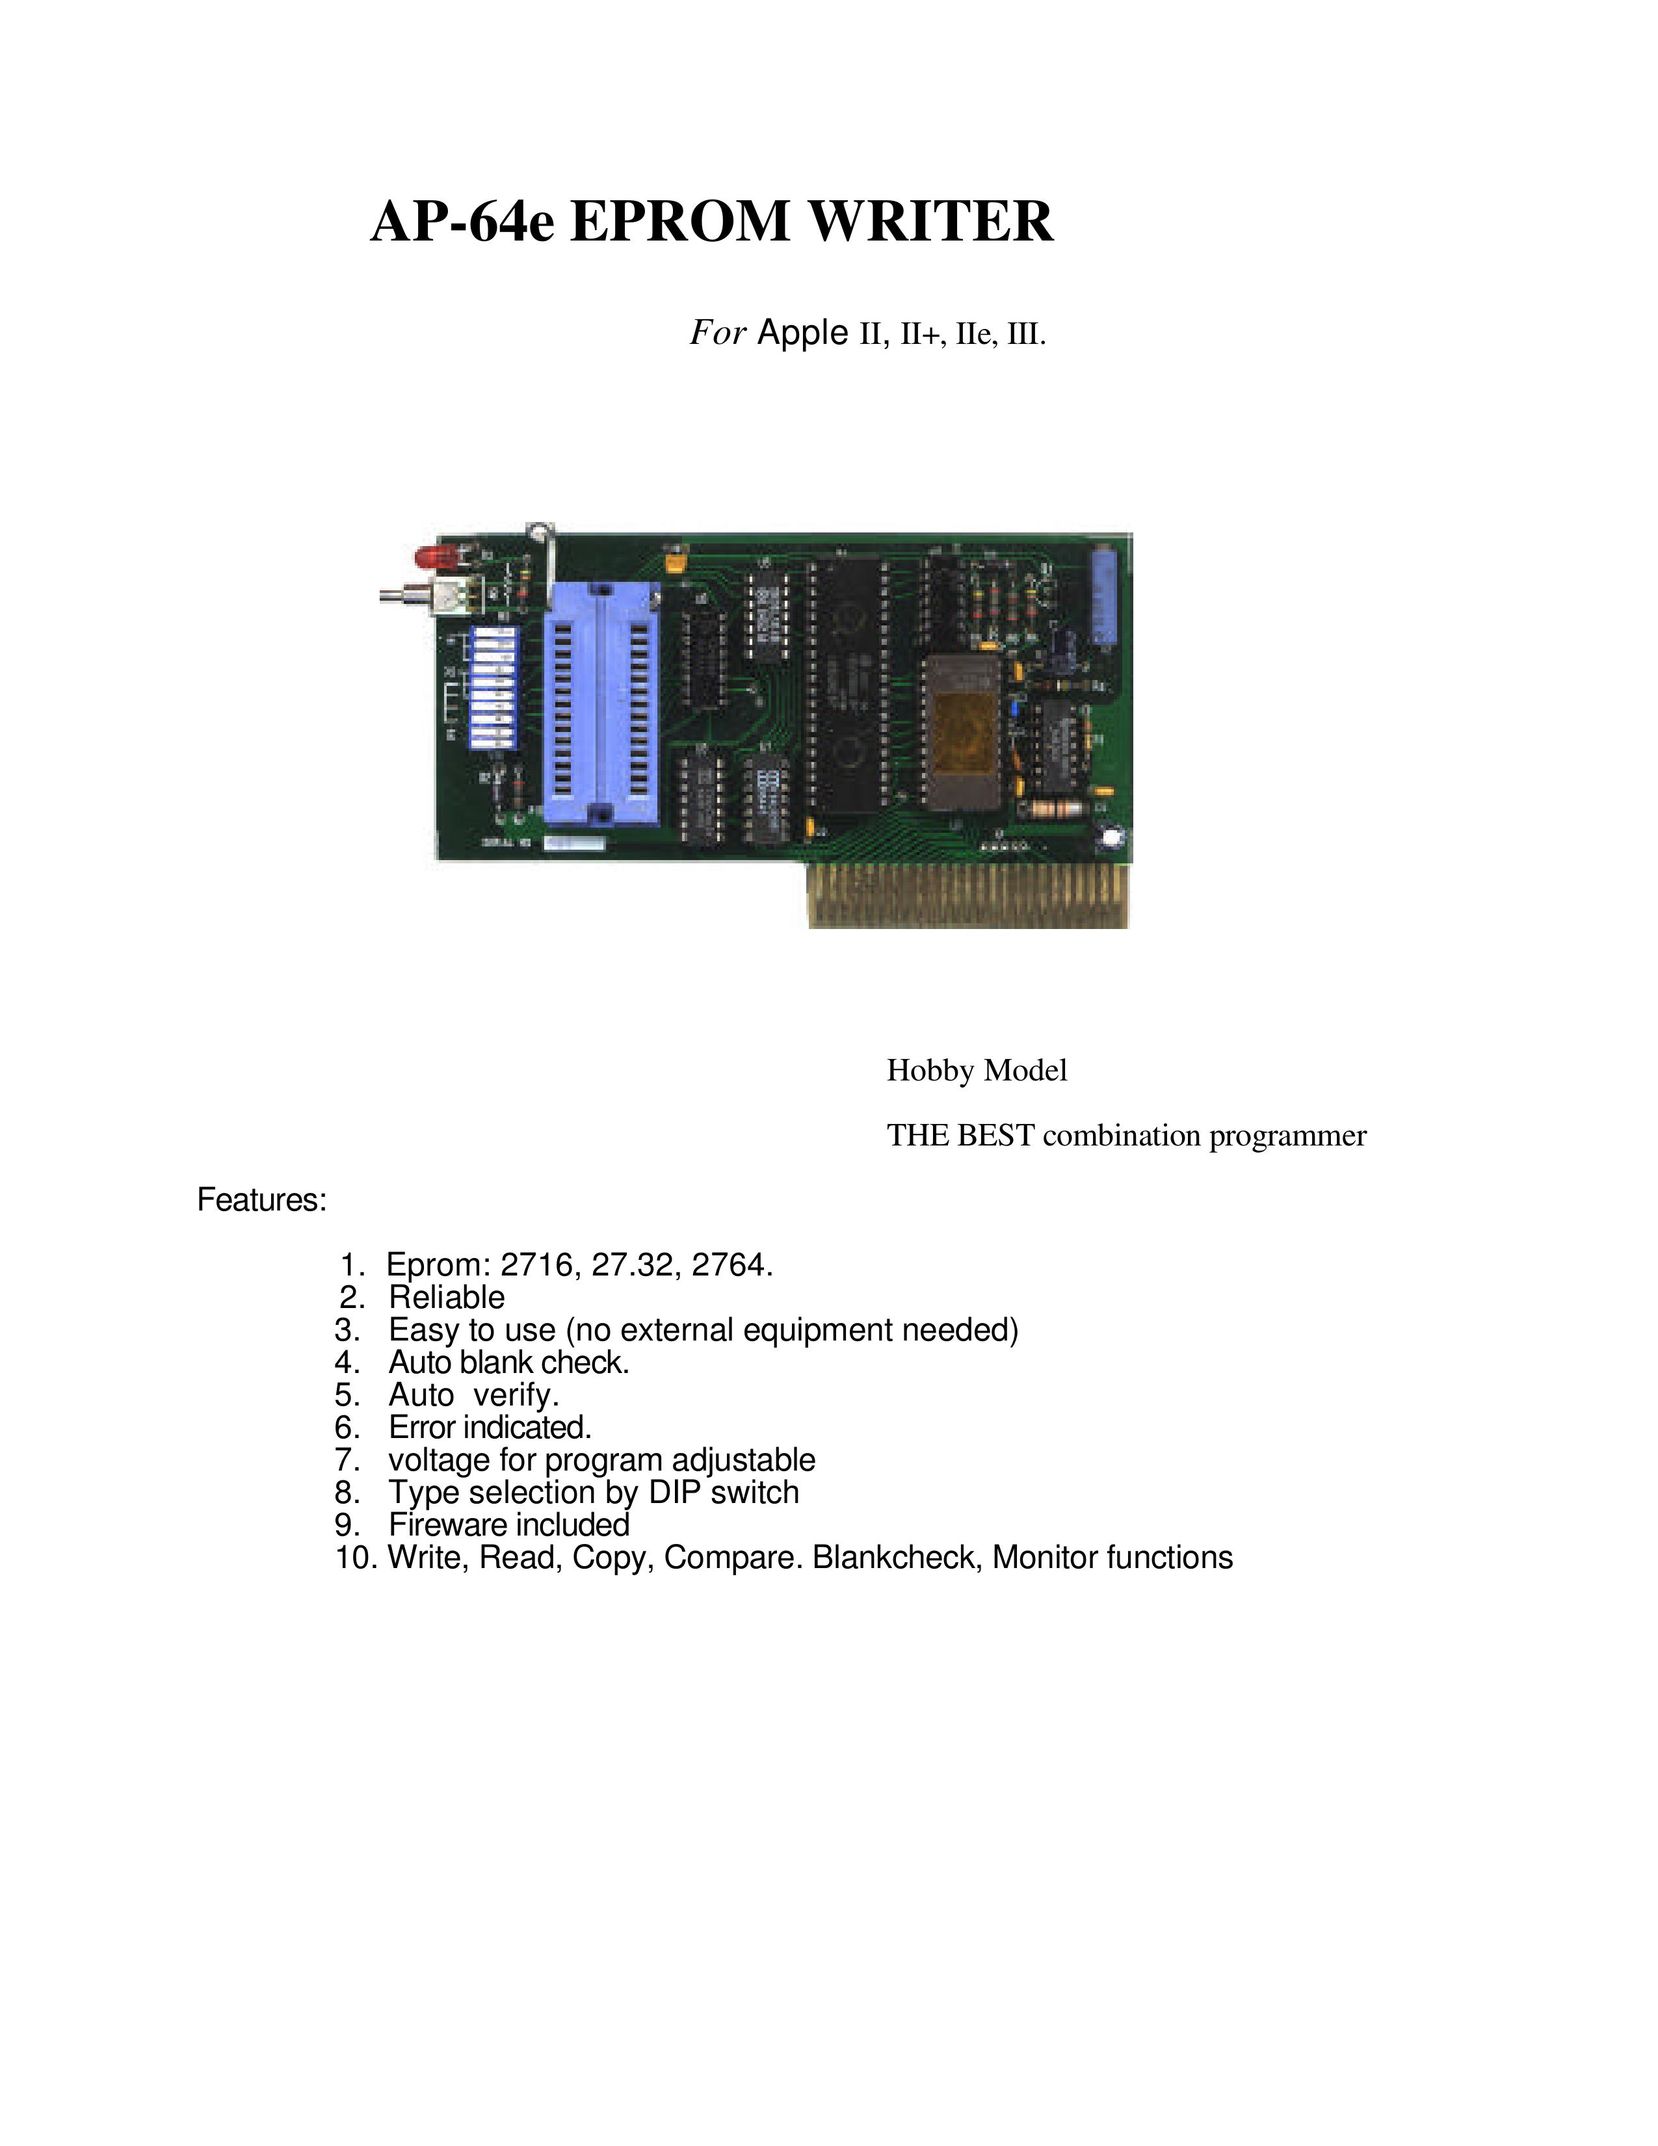 Apple AP-64e Computer Hardware User Manual